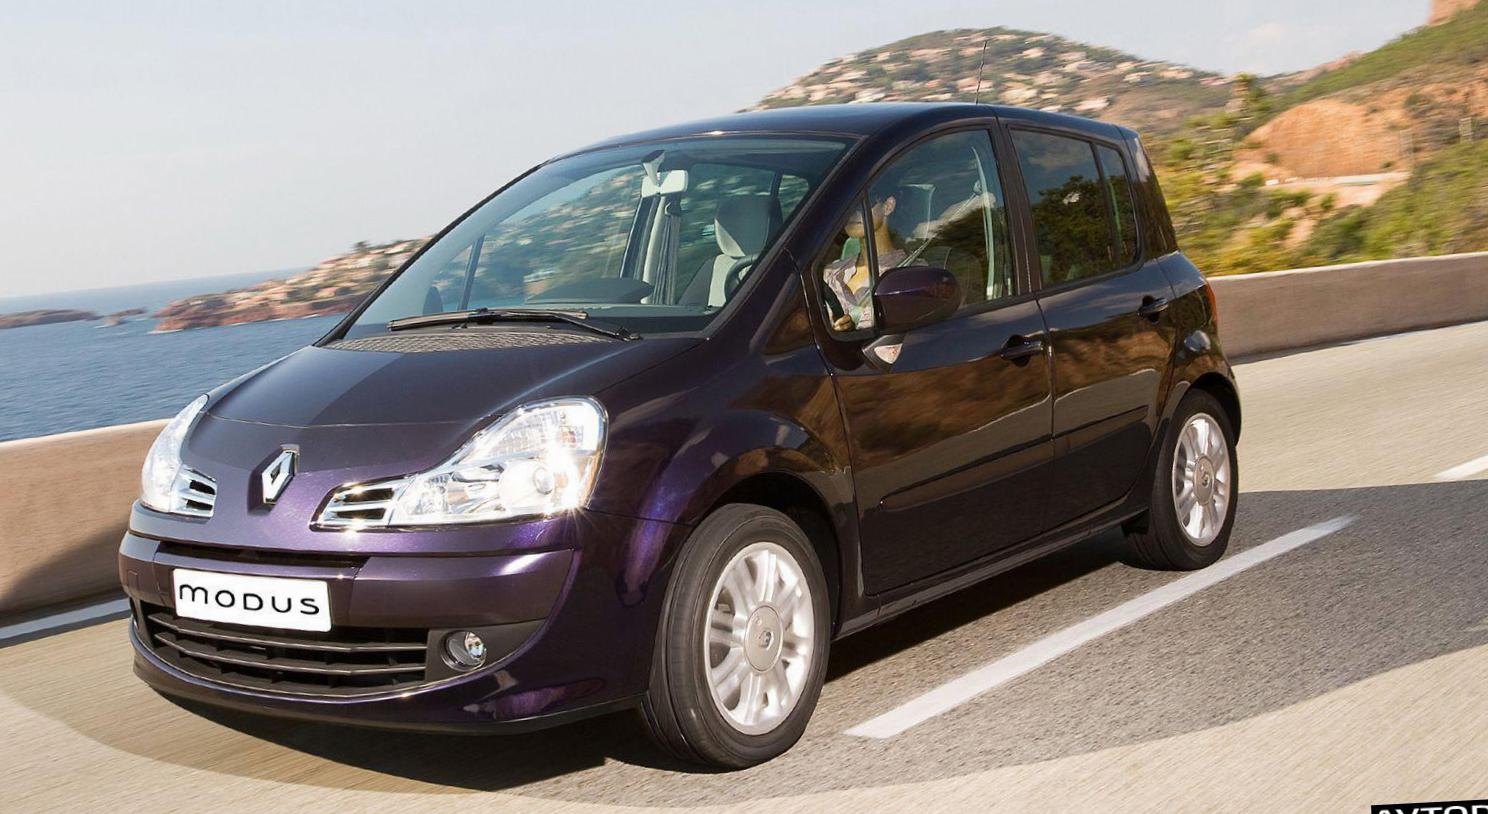 Modus Renault review 2010